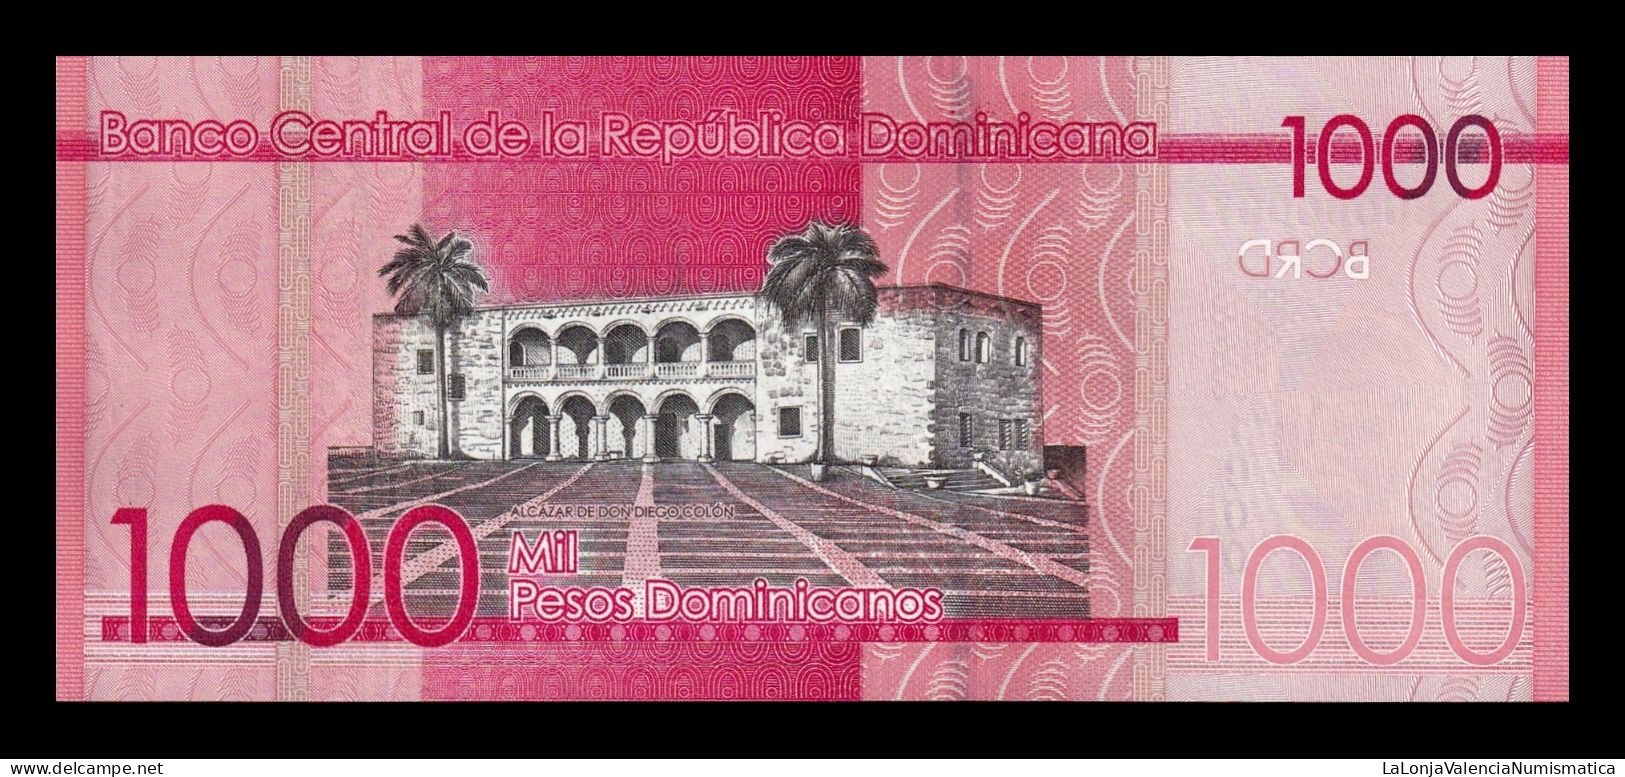 República Dominicana 1000 Pesos Dominicanos 2015 Pick 193b Low Serial 1001 Sc Unc - República Dominicana